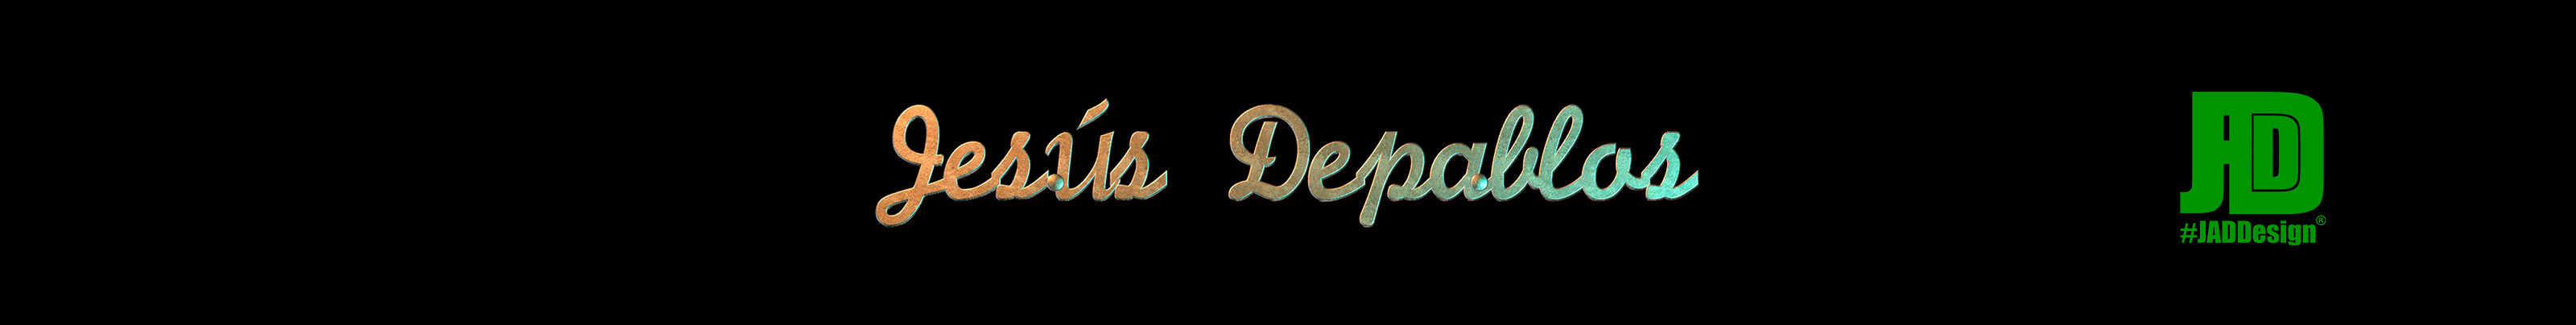 Jesús Depablos JADDesign®'s profile banner